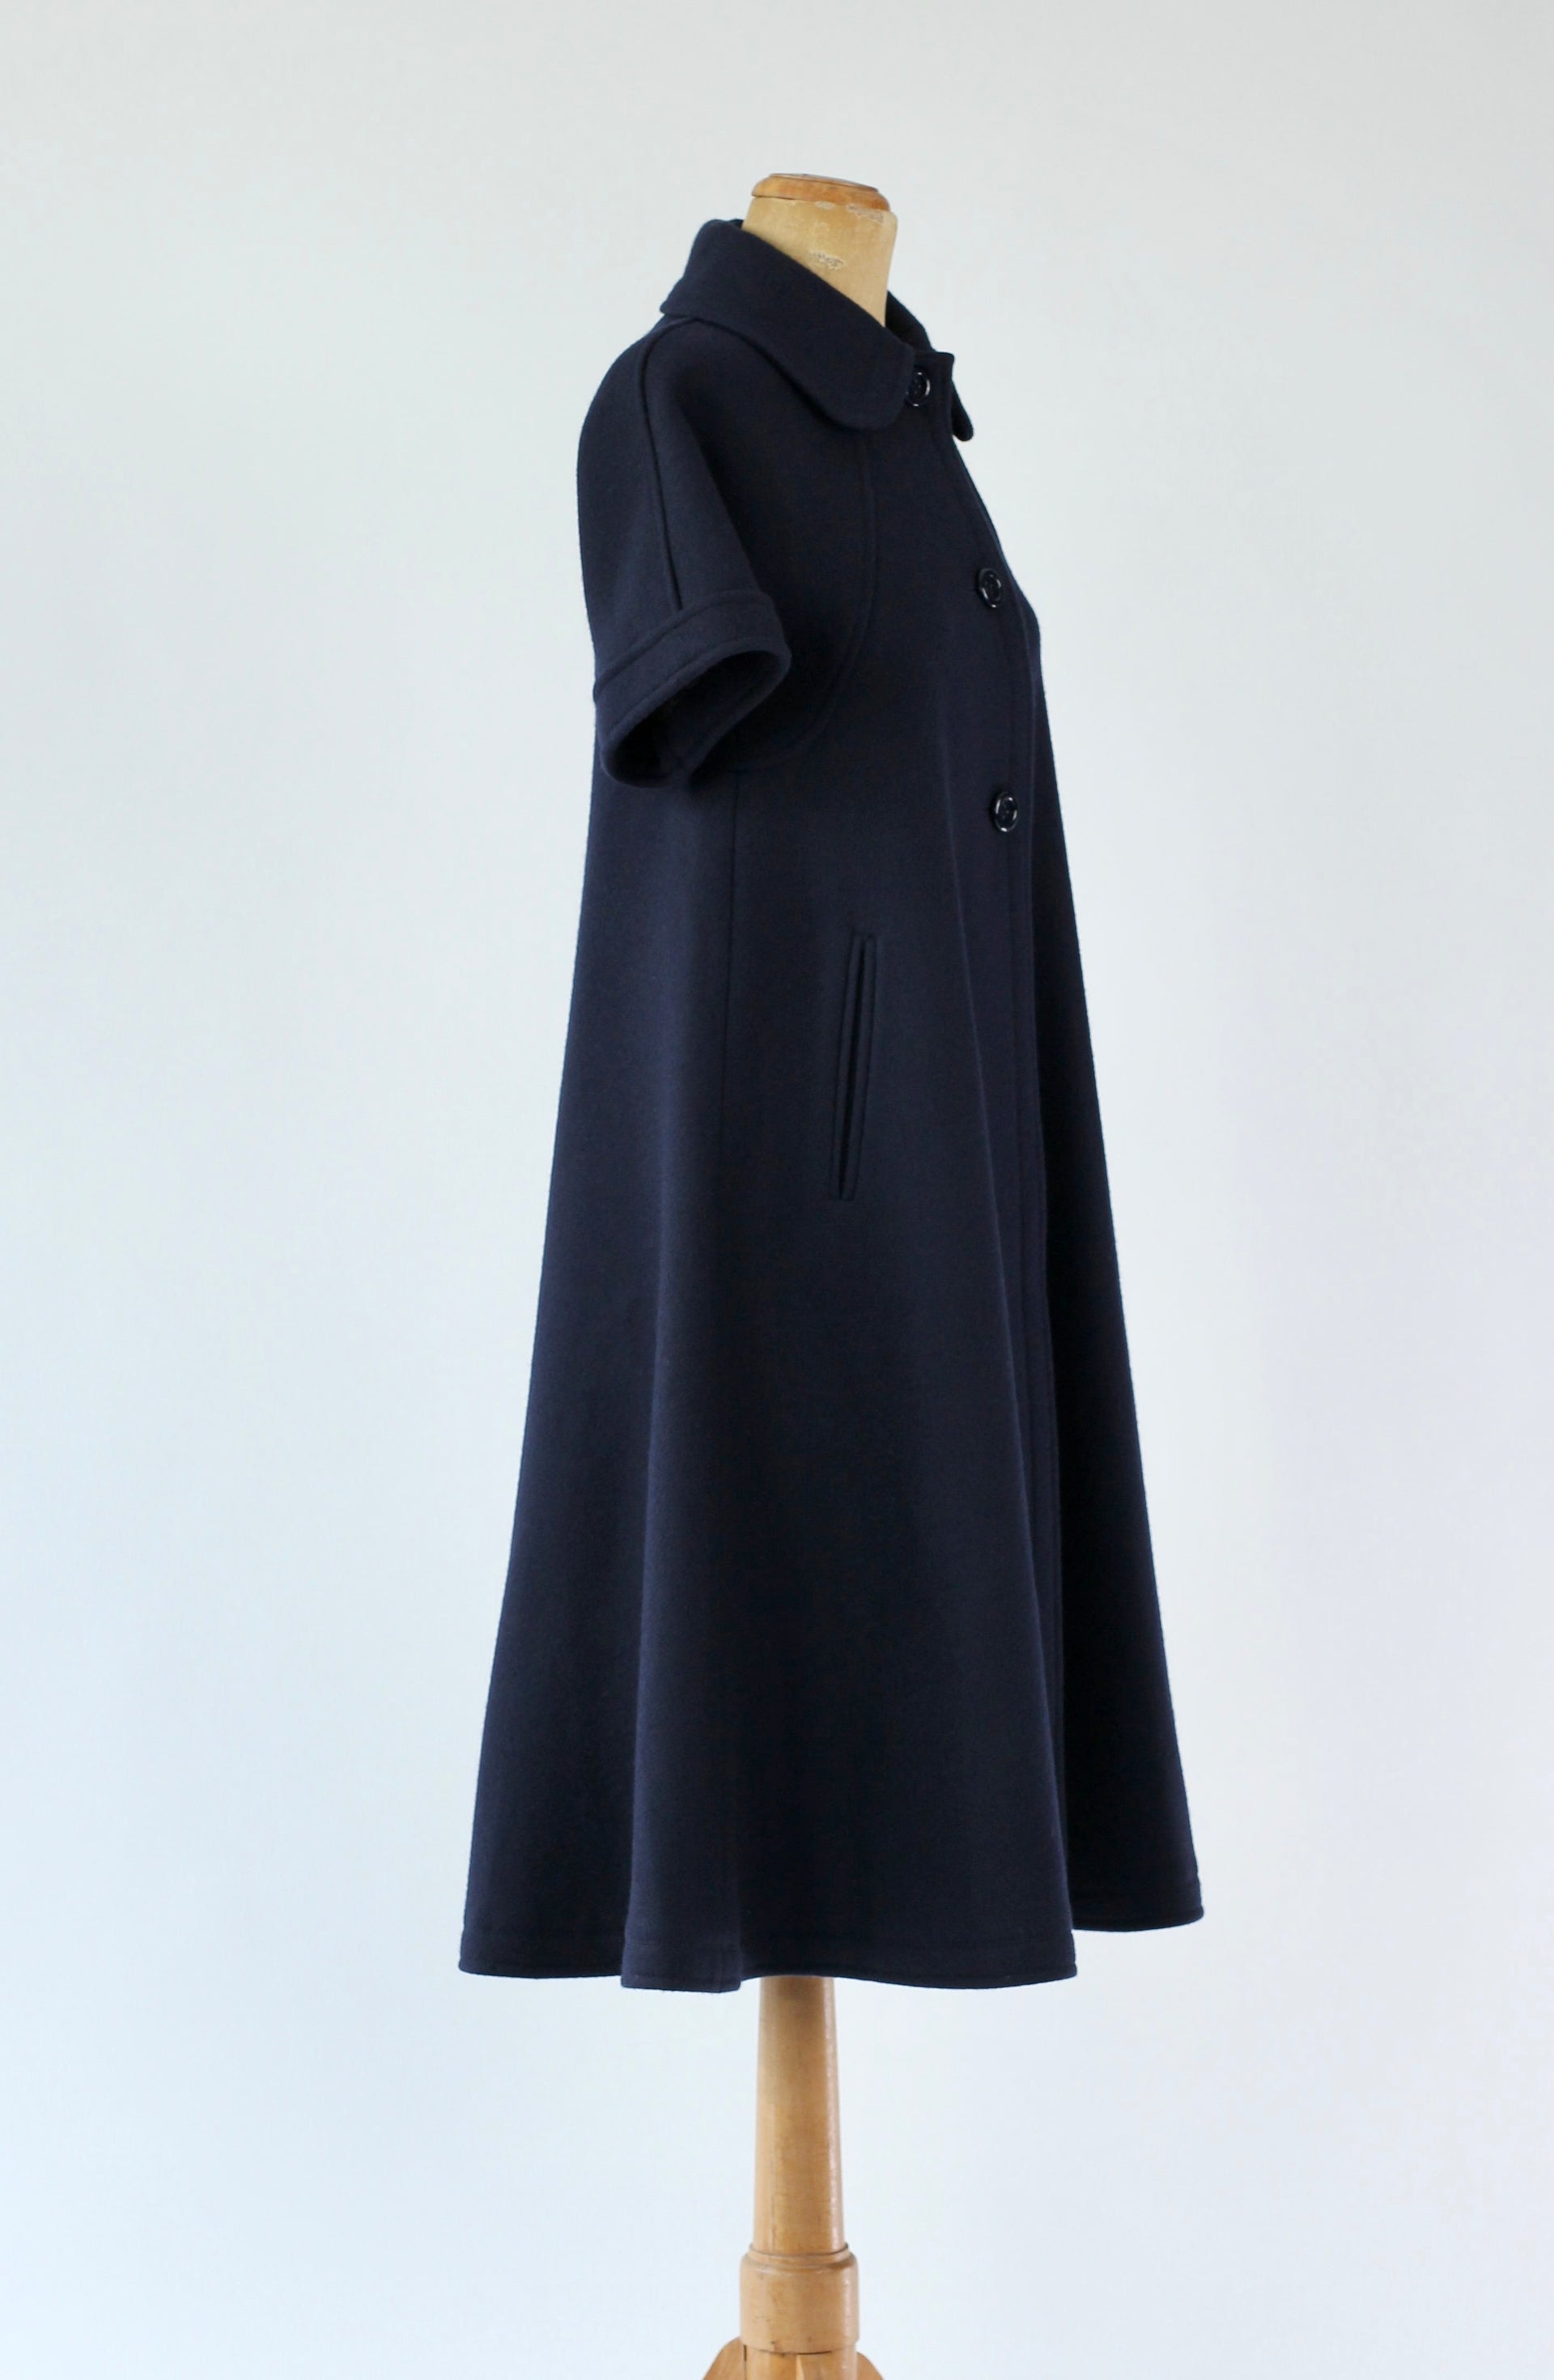 1970s Navy Blue Wool Coat//Short Sleeves//Size M